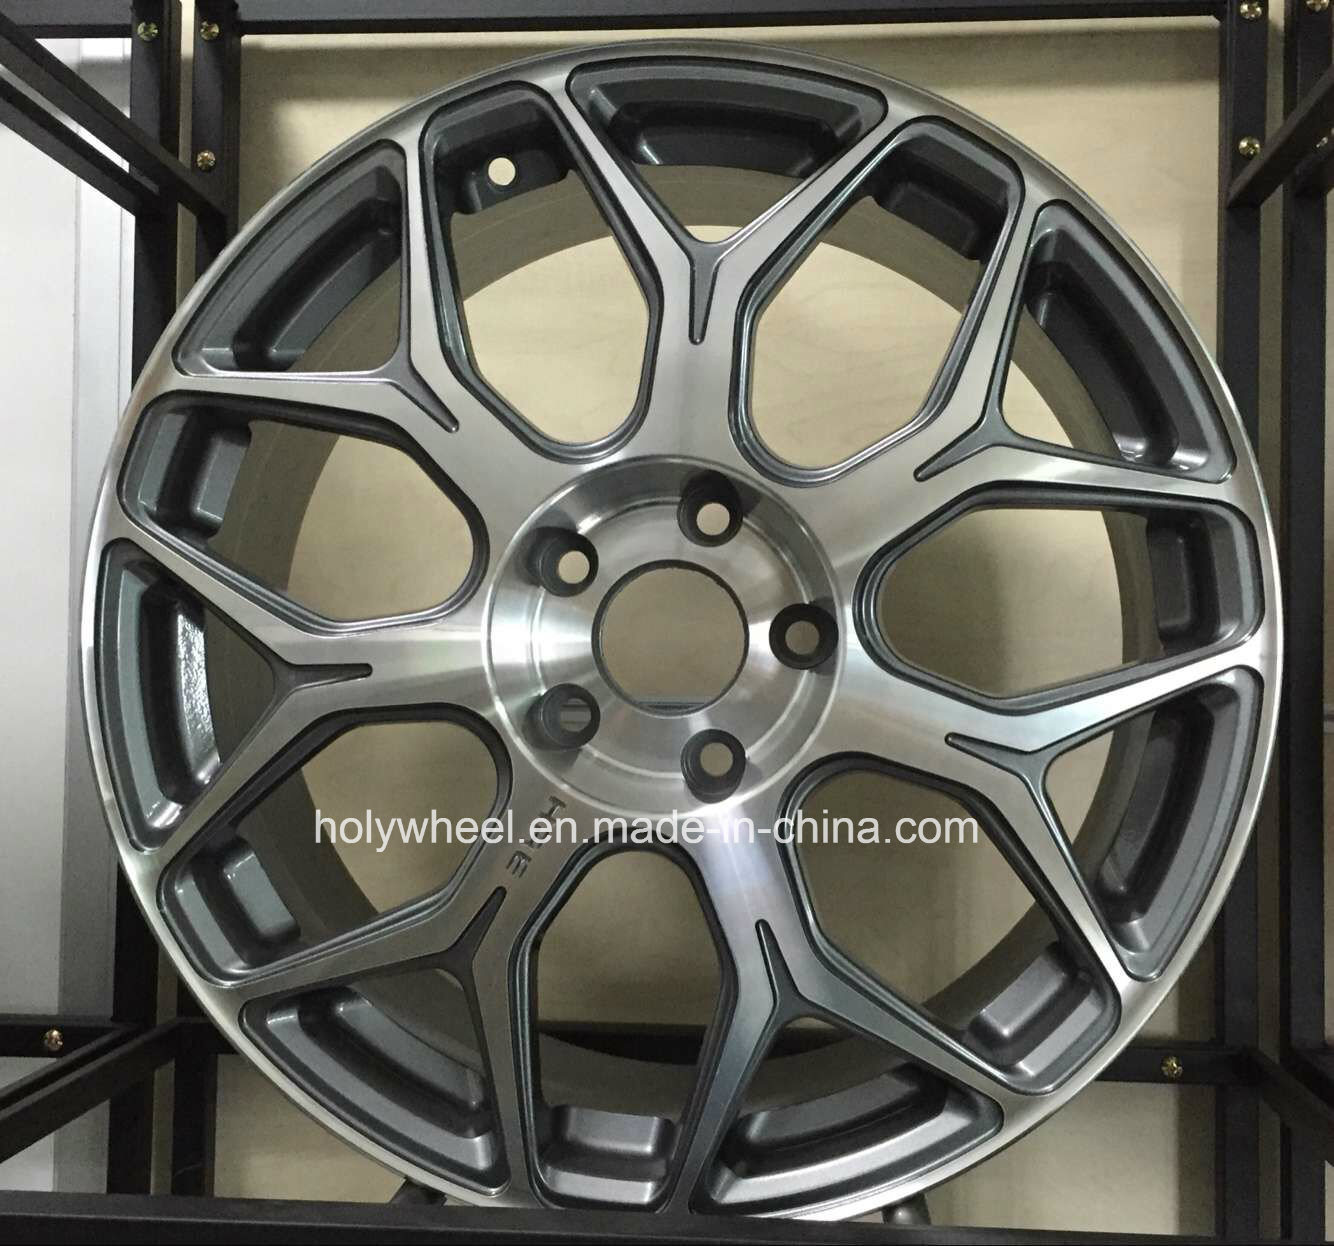 Hre Alloy Wheel/Aluminum Car Wheel